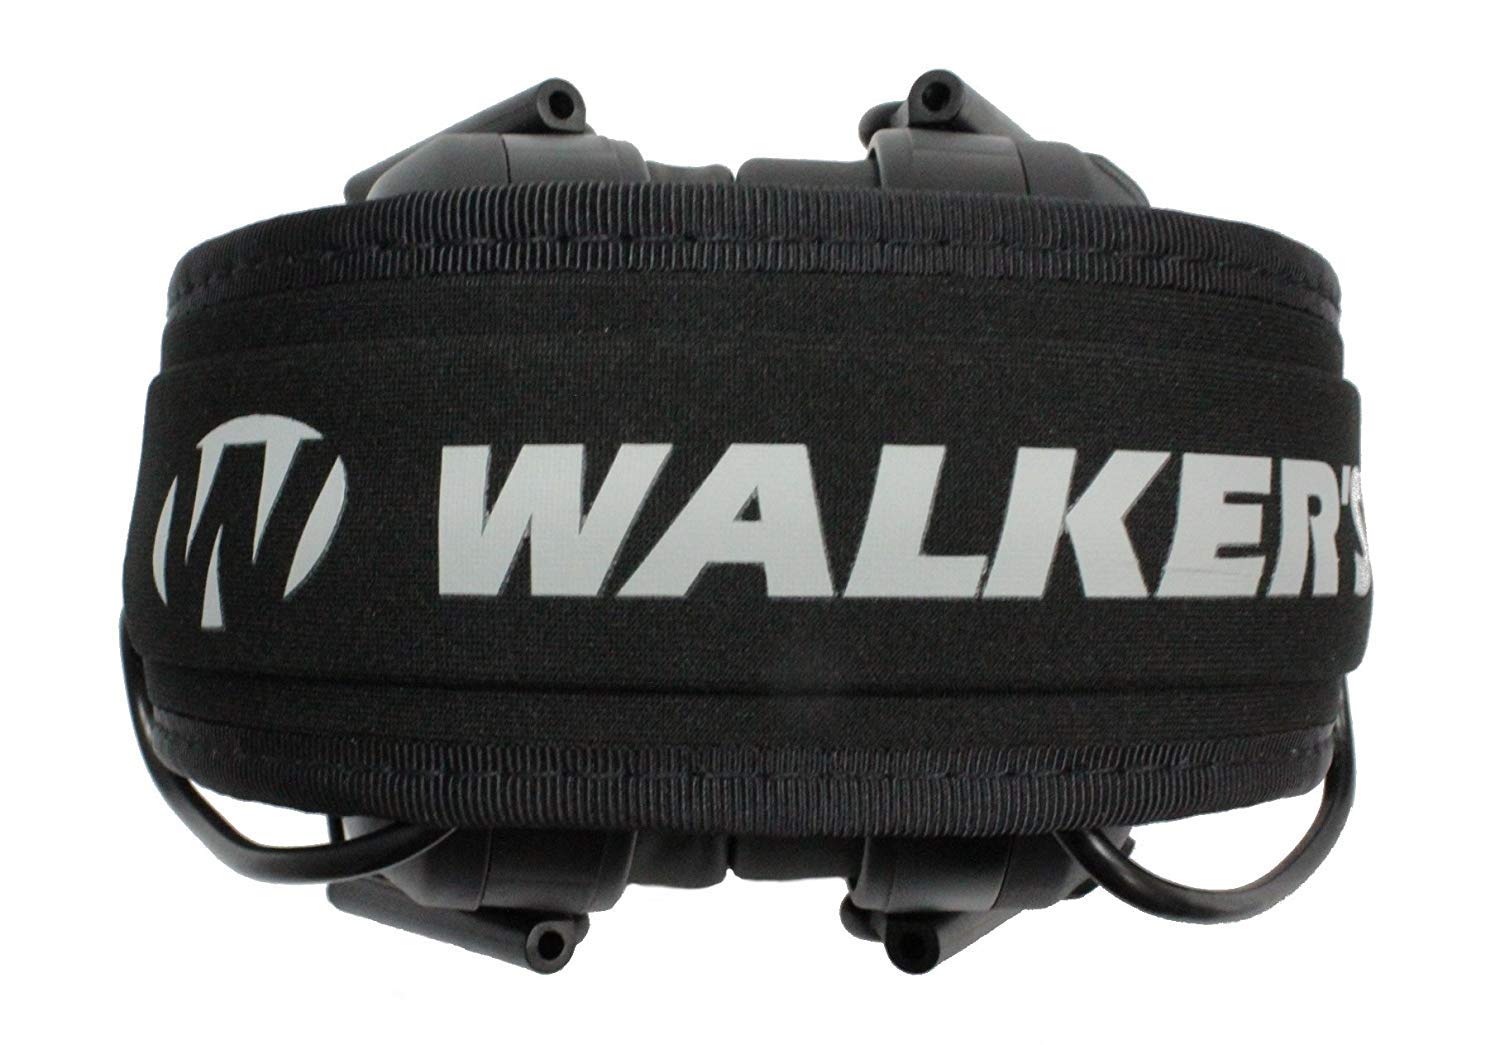 Walker's Razor Slim Ultra Low Profile Compact Design Adjustable Range Shooting Hunting Hearing Protection Electronic Earmuffs